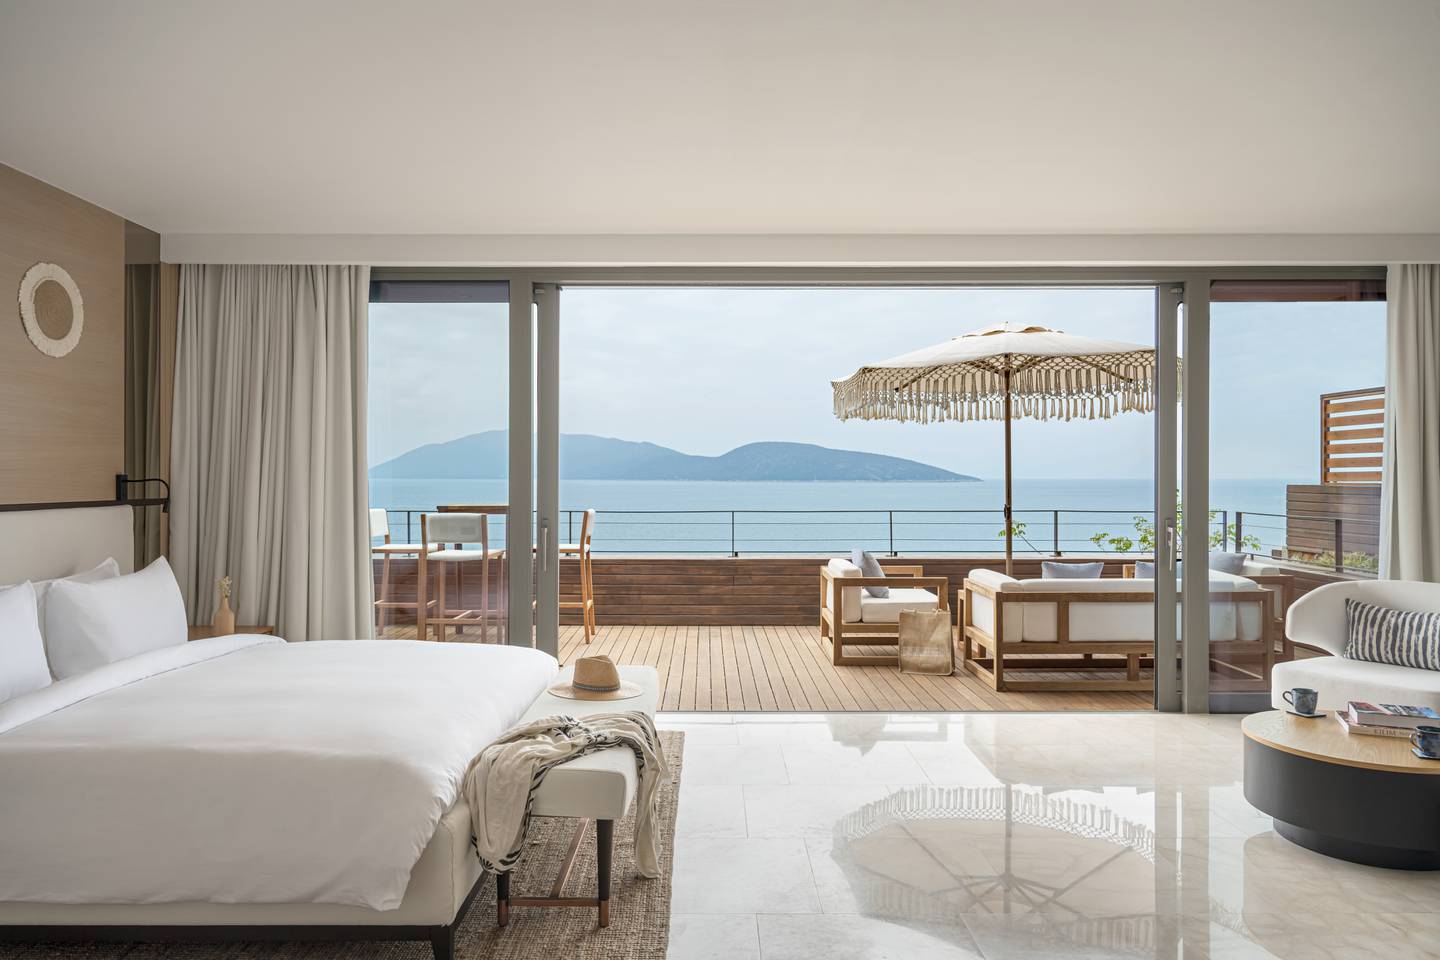 The Mett Bodrum has sea-view lofts and villas. Photo: Mett Hotel & Beach Resort Bodrum /Sunset Hospitality Group